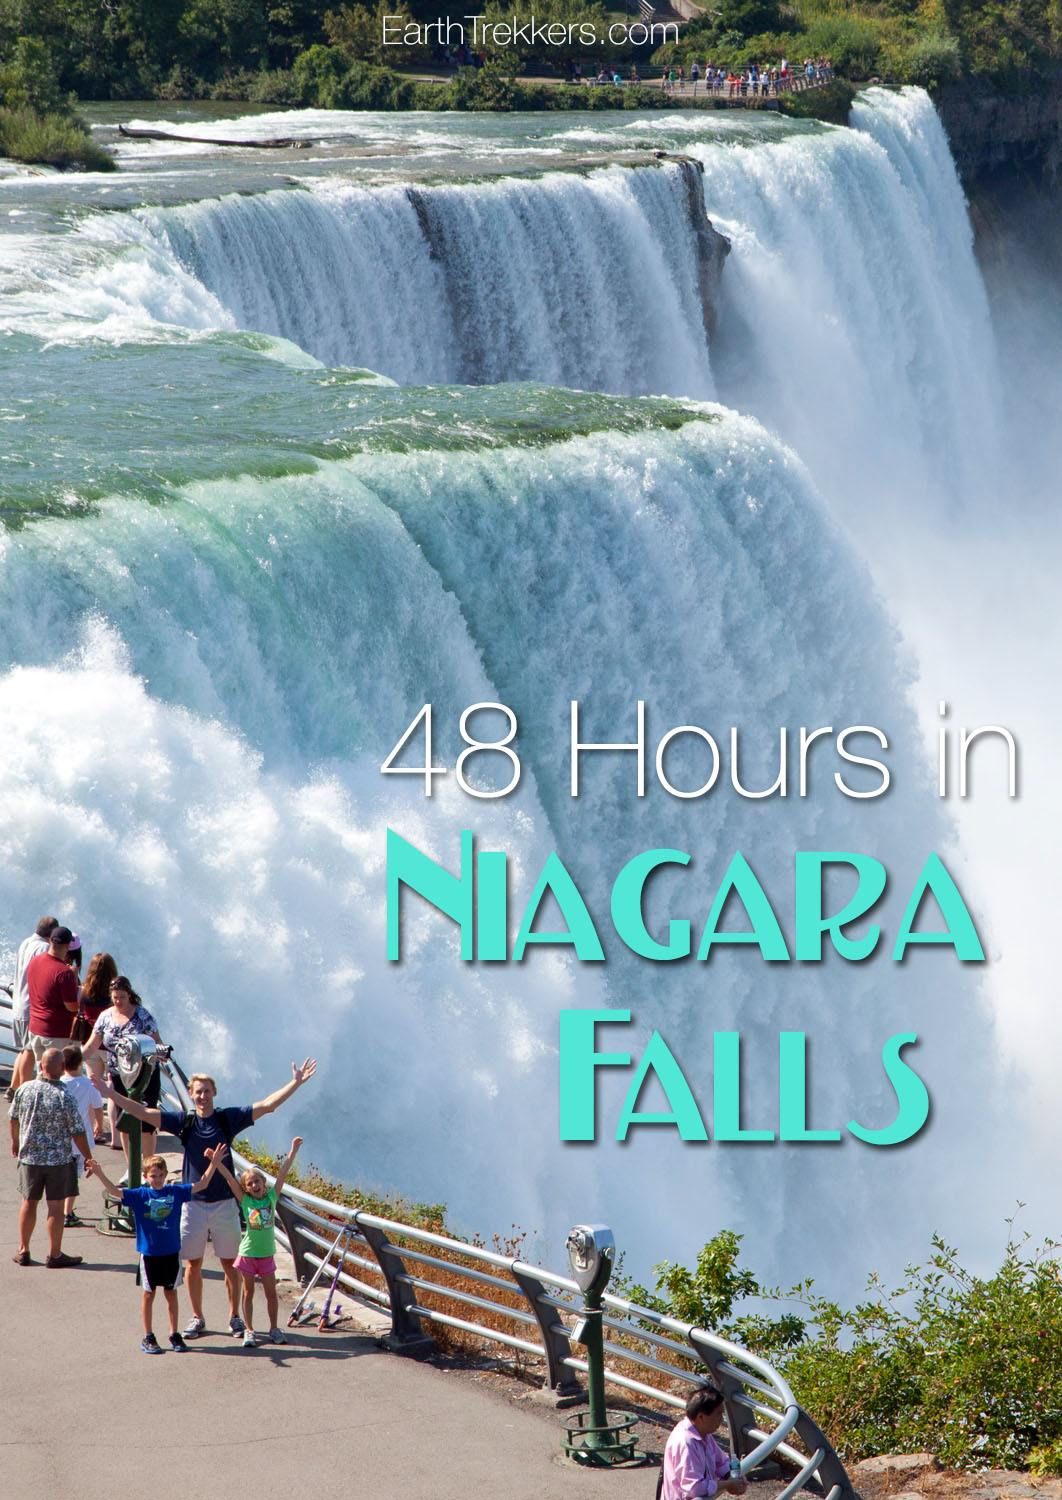 48 Hours in Niagara Falls with Kids